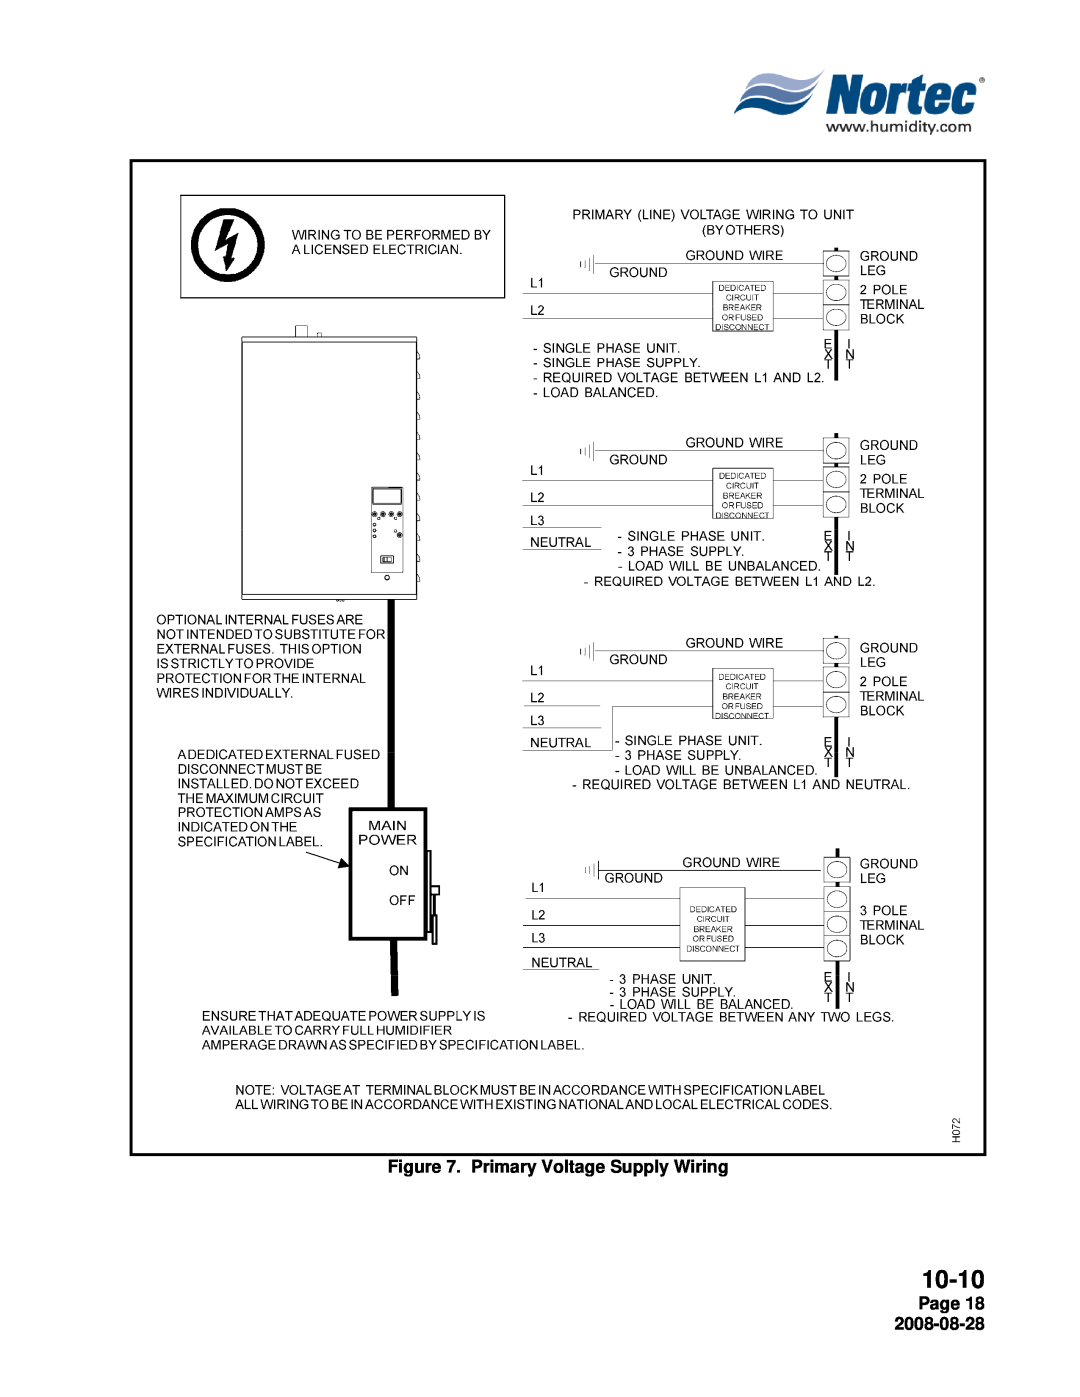 Nortec NH Series installation manual 10-10, Primary Voltage Supply Wiring, Page 18 